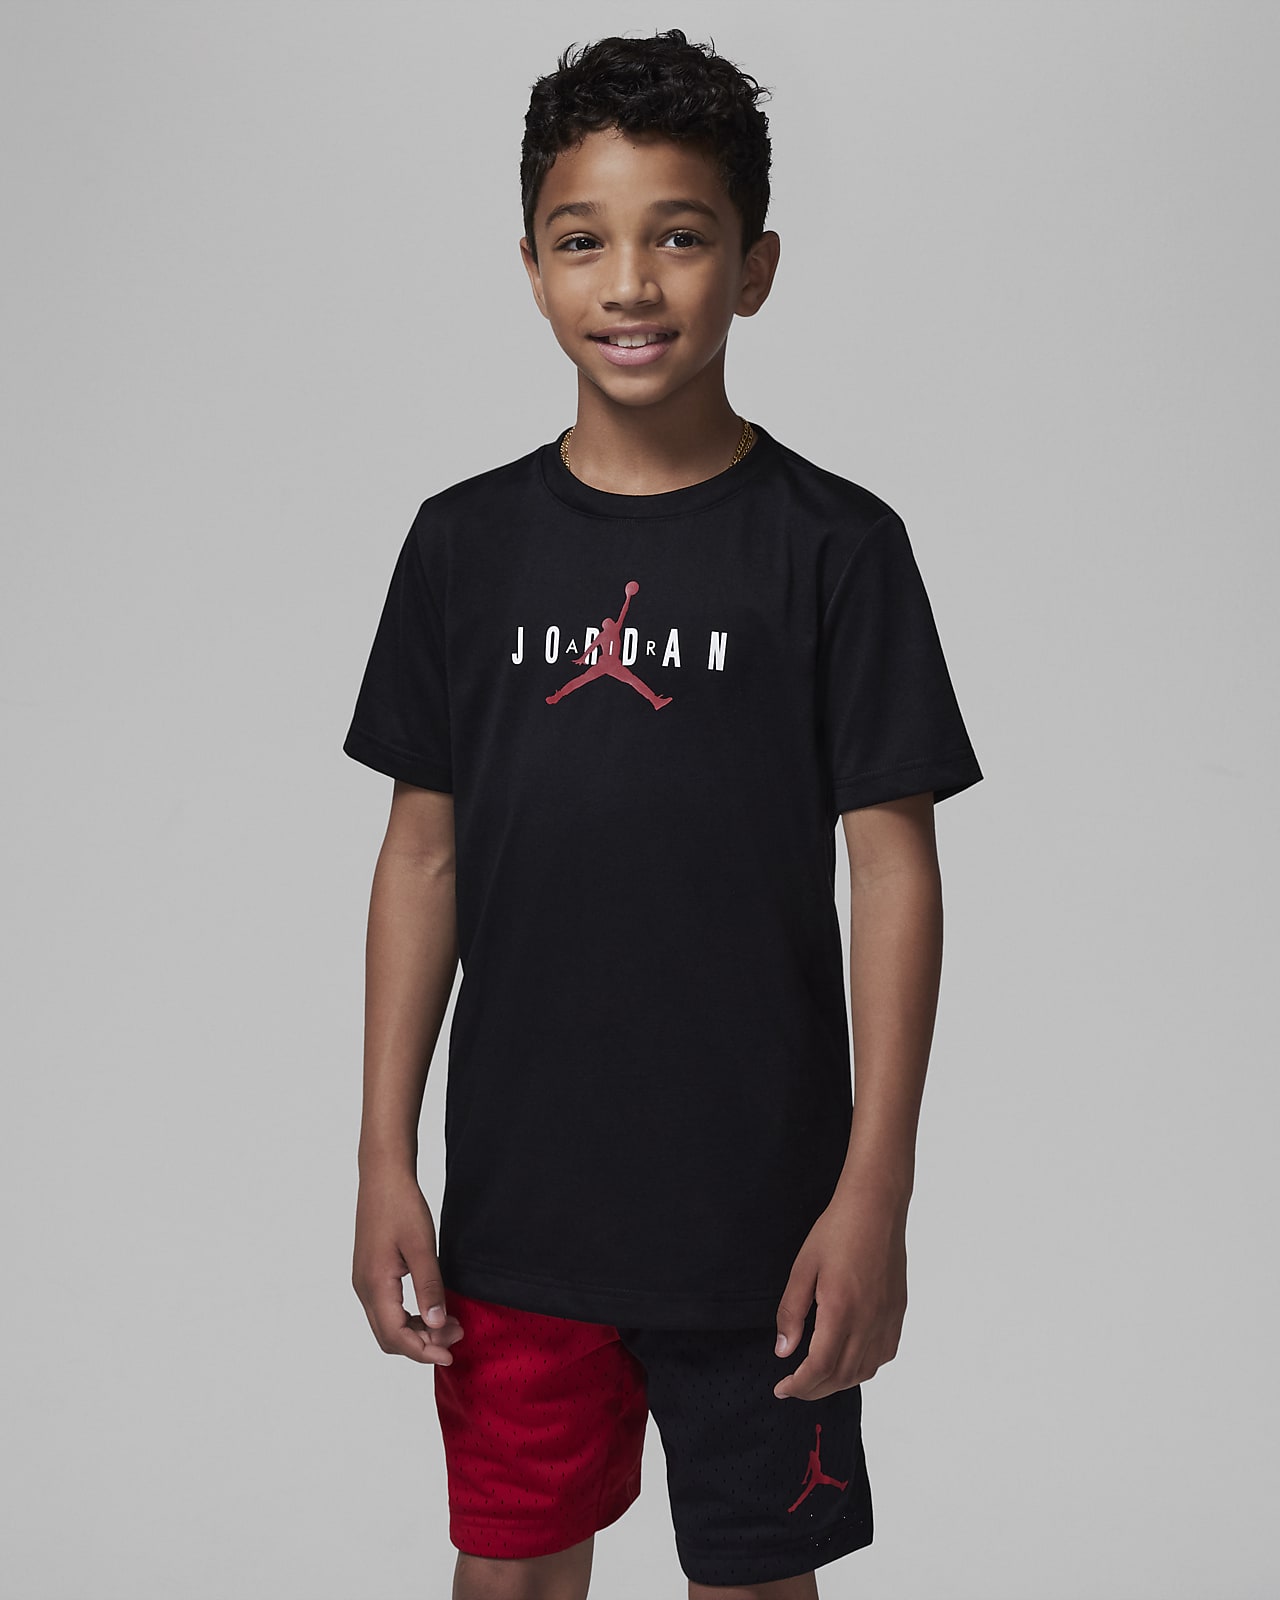 Jumpman Sustainable Graphic Tee Camiseta - Niño/a. ES